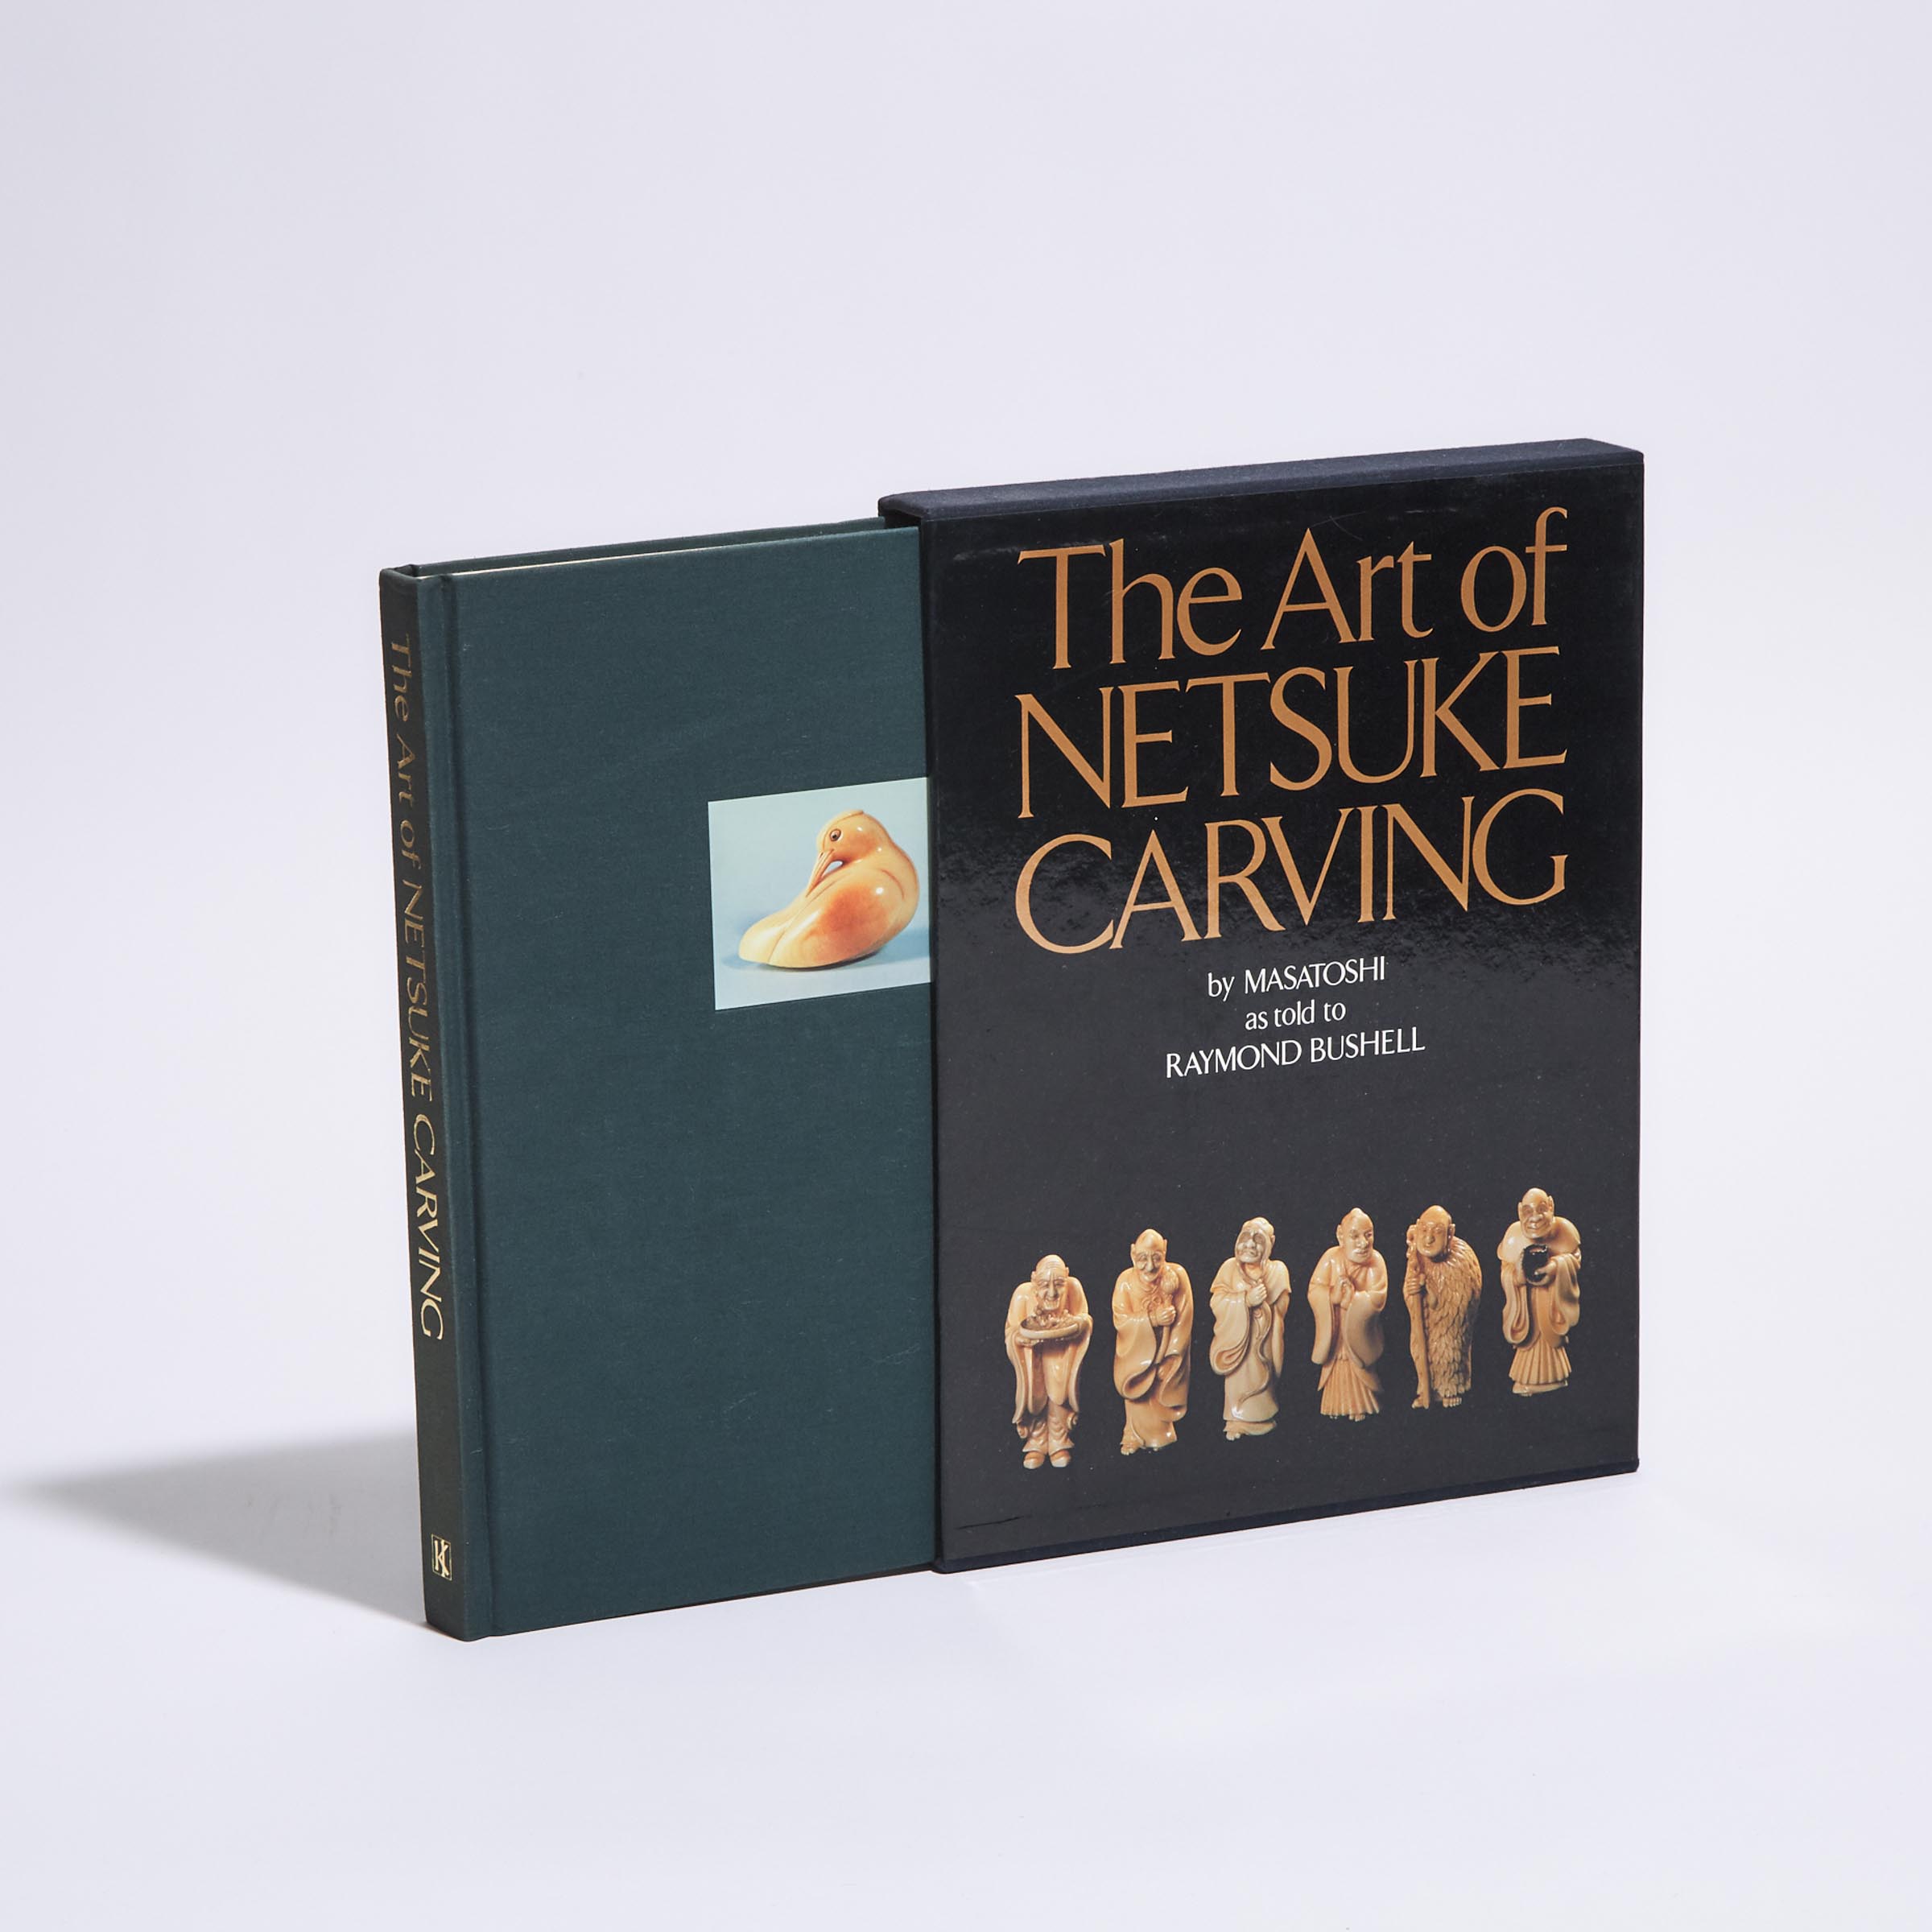 Raymond Bushell, The Art of Netsuke Carving by Masatoshi, 1981, Signed by Masatoshi and Raymond Bushell